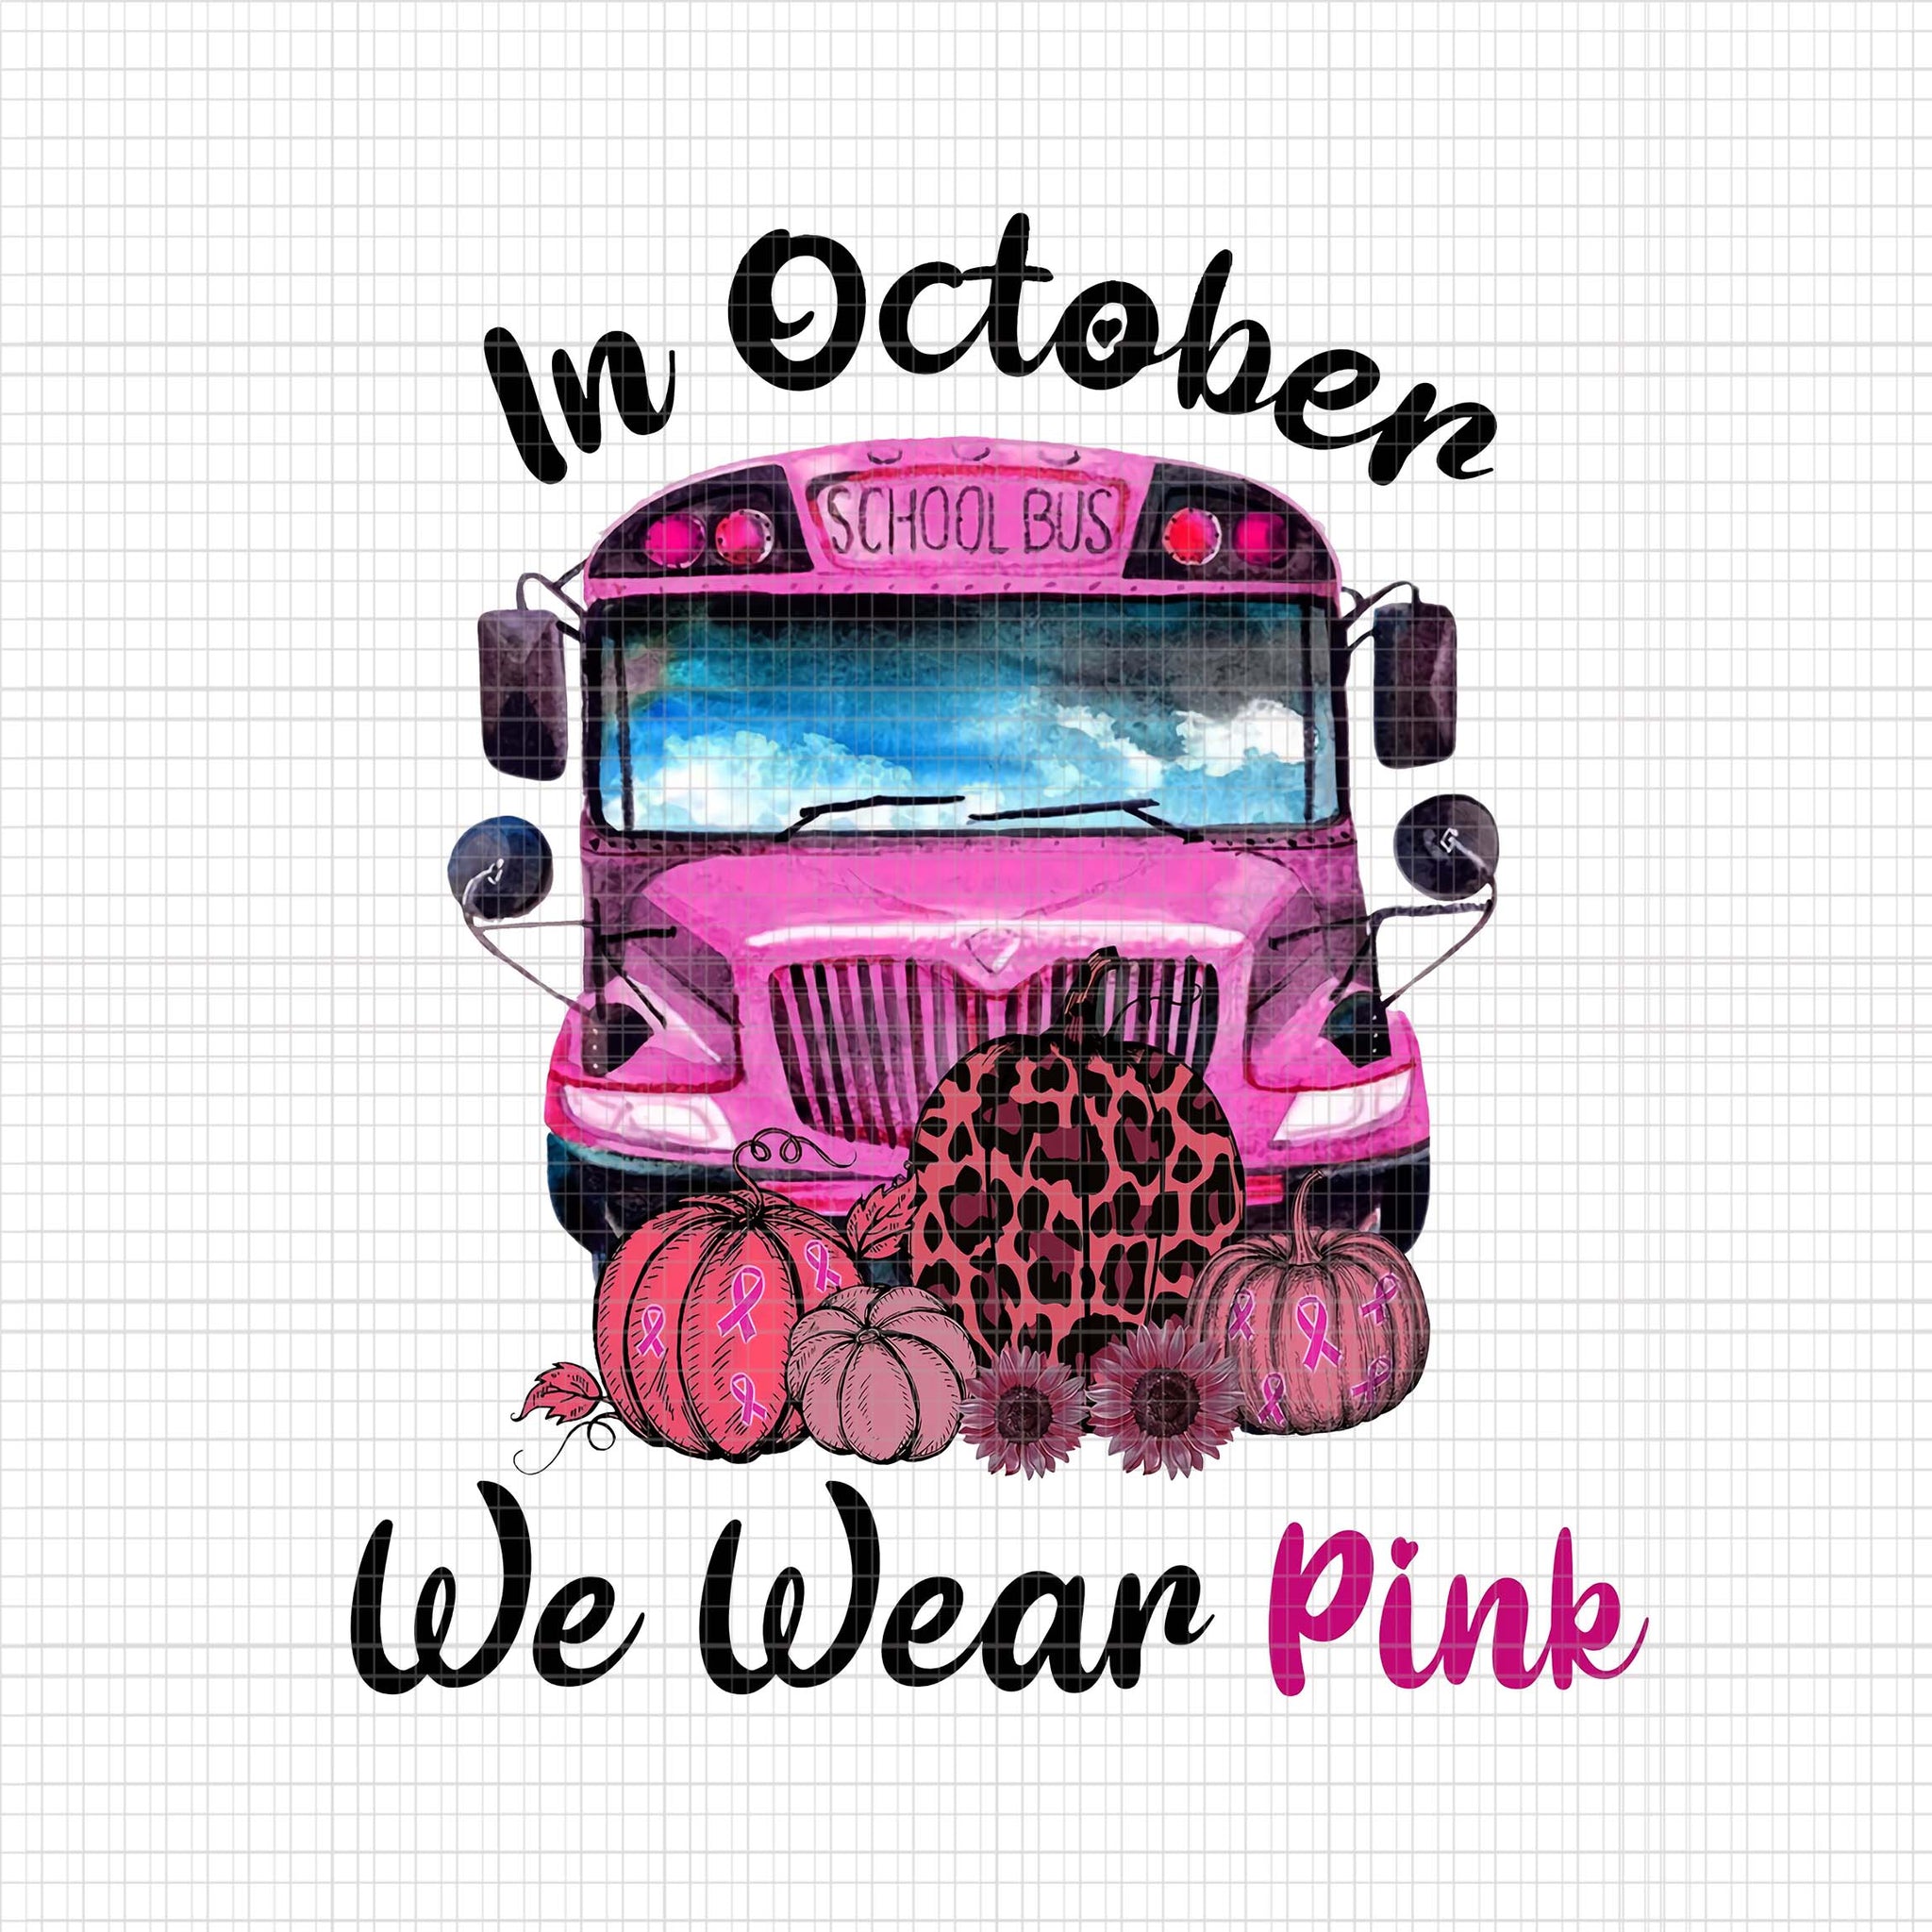 In October We Wear Pink Png, In October We Wear Pink Bus, Pink Bus Png, School Bus Png, Breast Cancer Awareness, Breast Cancer Png, Bus Png, Pink Rippon, Pink Bus Vector